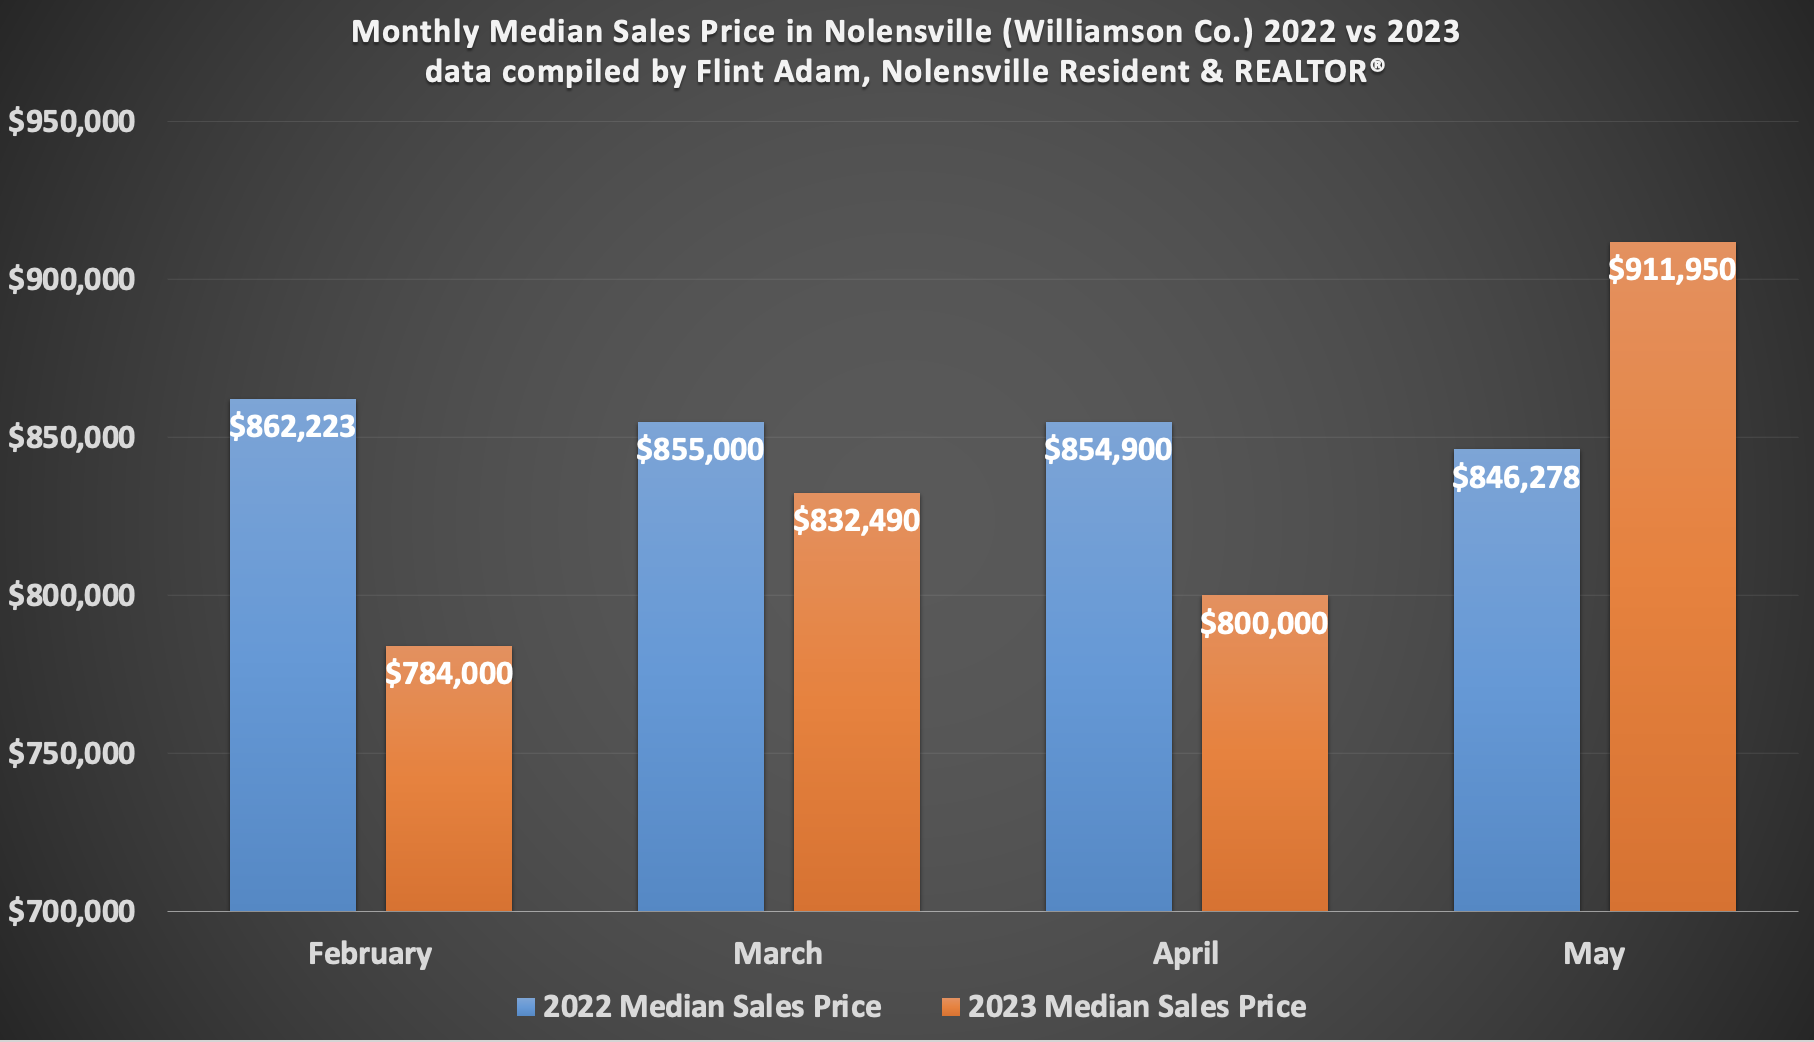 Median Sales Price of a Nolensville Home - 2022 vs 2023 - May 2023 data | compiled by Flint Adam, Nolensville Resident & REALTOR